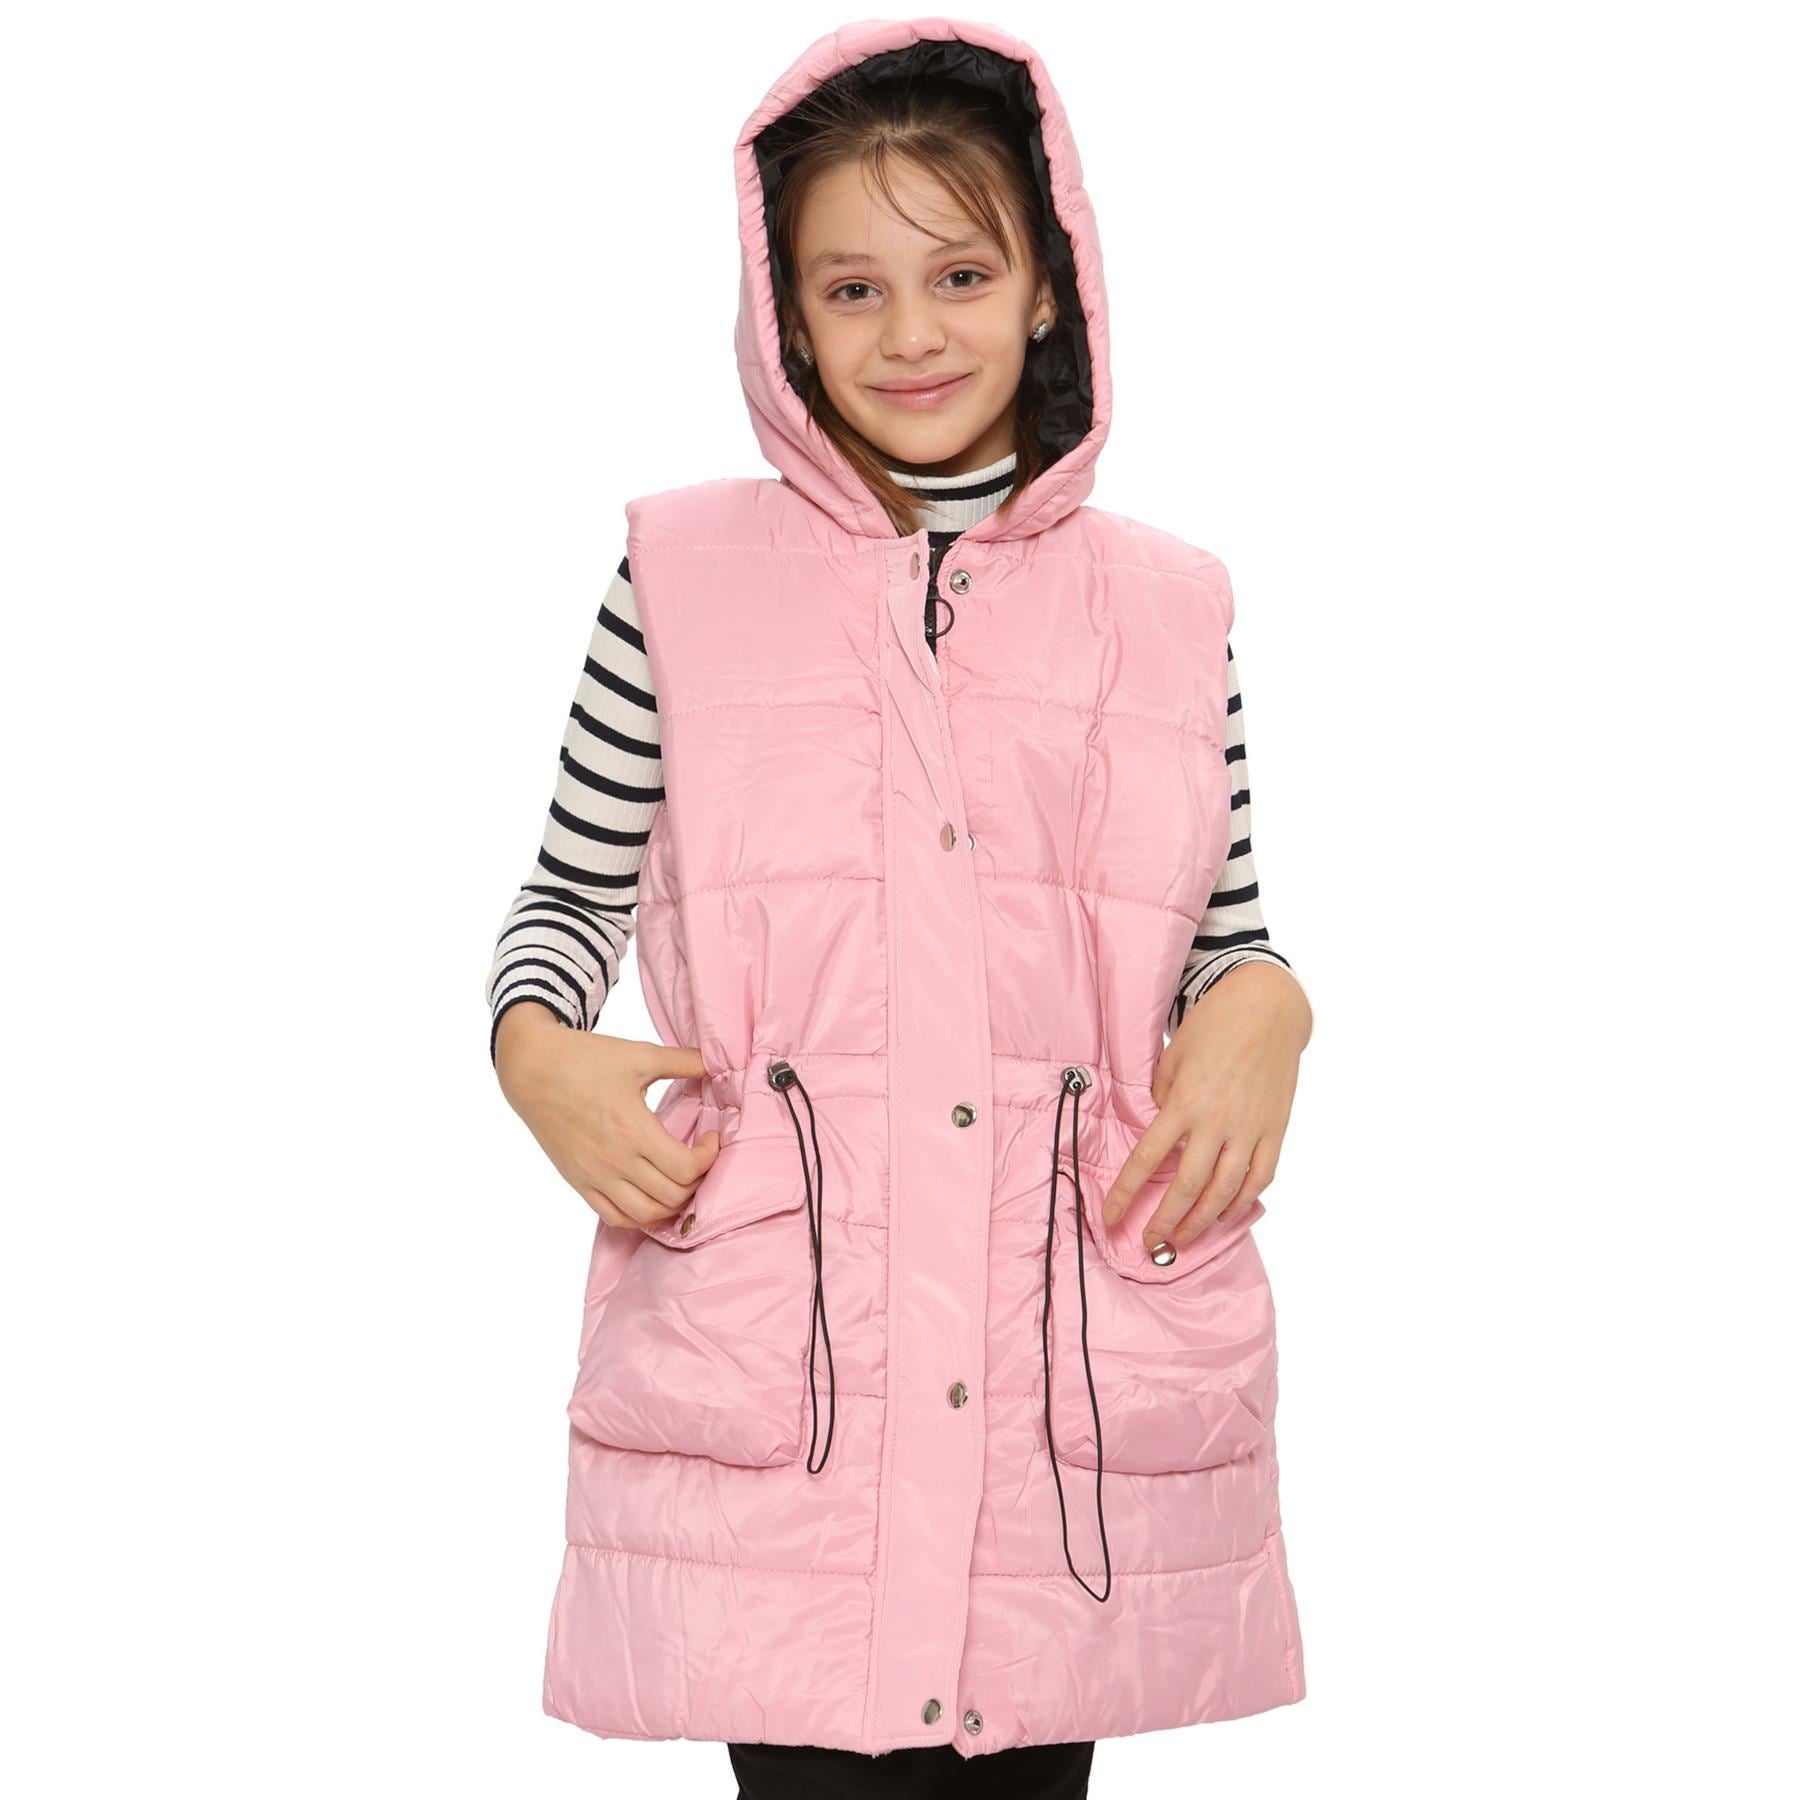 Kids Girls Pink Gilet Long Line Style Jacket